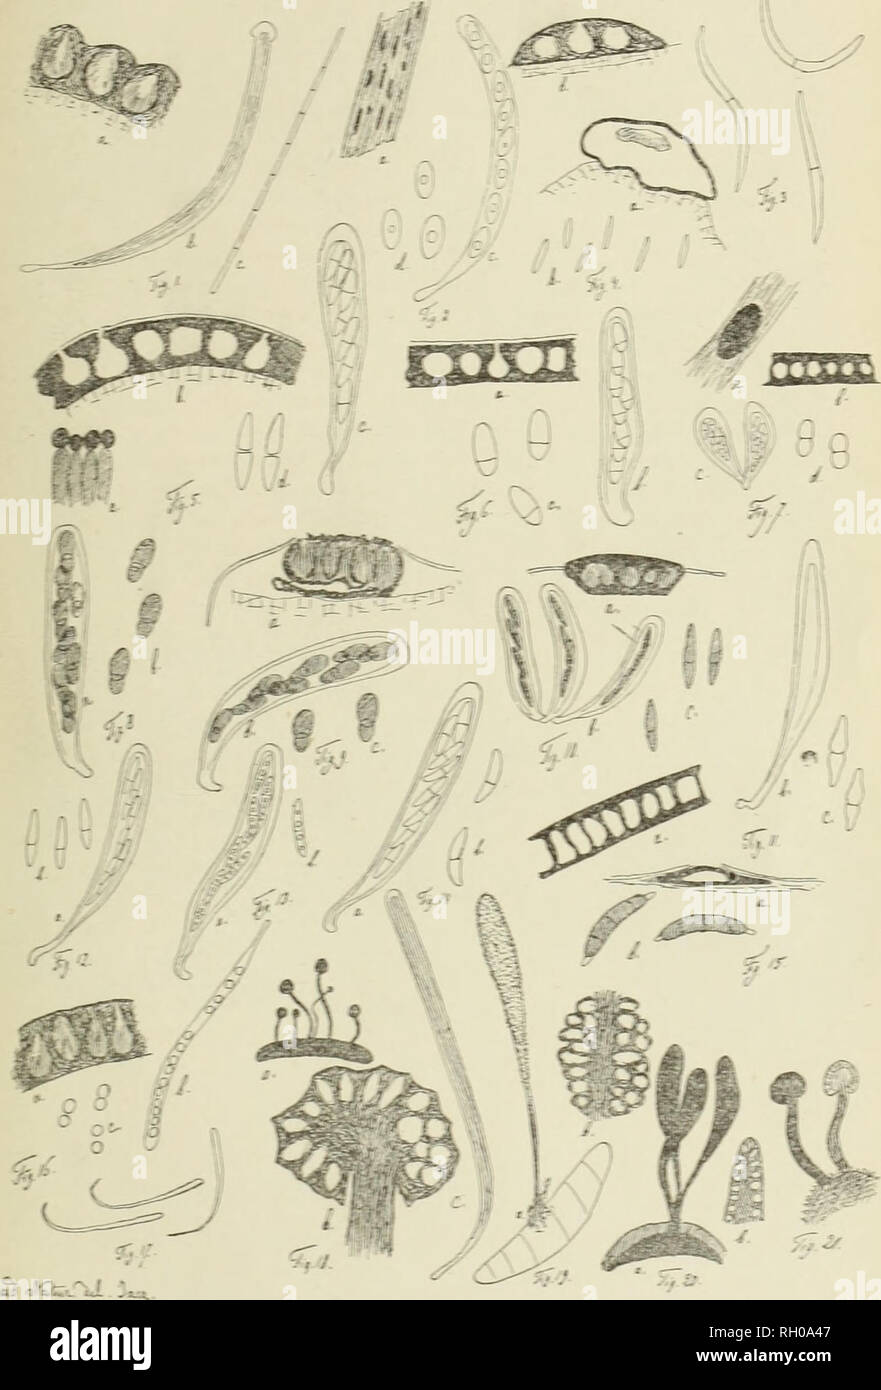 . Bulletin. Mycology; Fungi; Botany. BULL DE LA SOC HIC. DE FRANCE. T. H, PL. 117. i. L Ef.îihlœ typhina. - 2. Phyllachora graminîs. — 3. Phyllachora Podagrarè. — 4. Uazzantia Galli. — 5. Scr rhïa riiuosa — 6. Dothidella Cloii. — 7. Dothidella Ihoracella — 8. Dothidea Sambuci. — 9. Dothi.lea Samburi forma illî. is. — 10. Dothidea pnccinioides. — 11. Dothidea ribesia. — 12. Dothidea Berberidis — 1&amp; Dothidea inscalpia. — 14. Dothidea Hippophceo». — 15. Rhopographus pteridÉ. — 16. Hippocrea polvinata. — 17. Polystigma robrum. — 18. Claviceps pnrporea. — 19. Cordyceps militaris. — 20. ConJyc-p Stock Photo